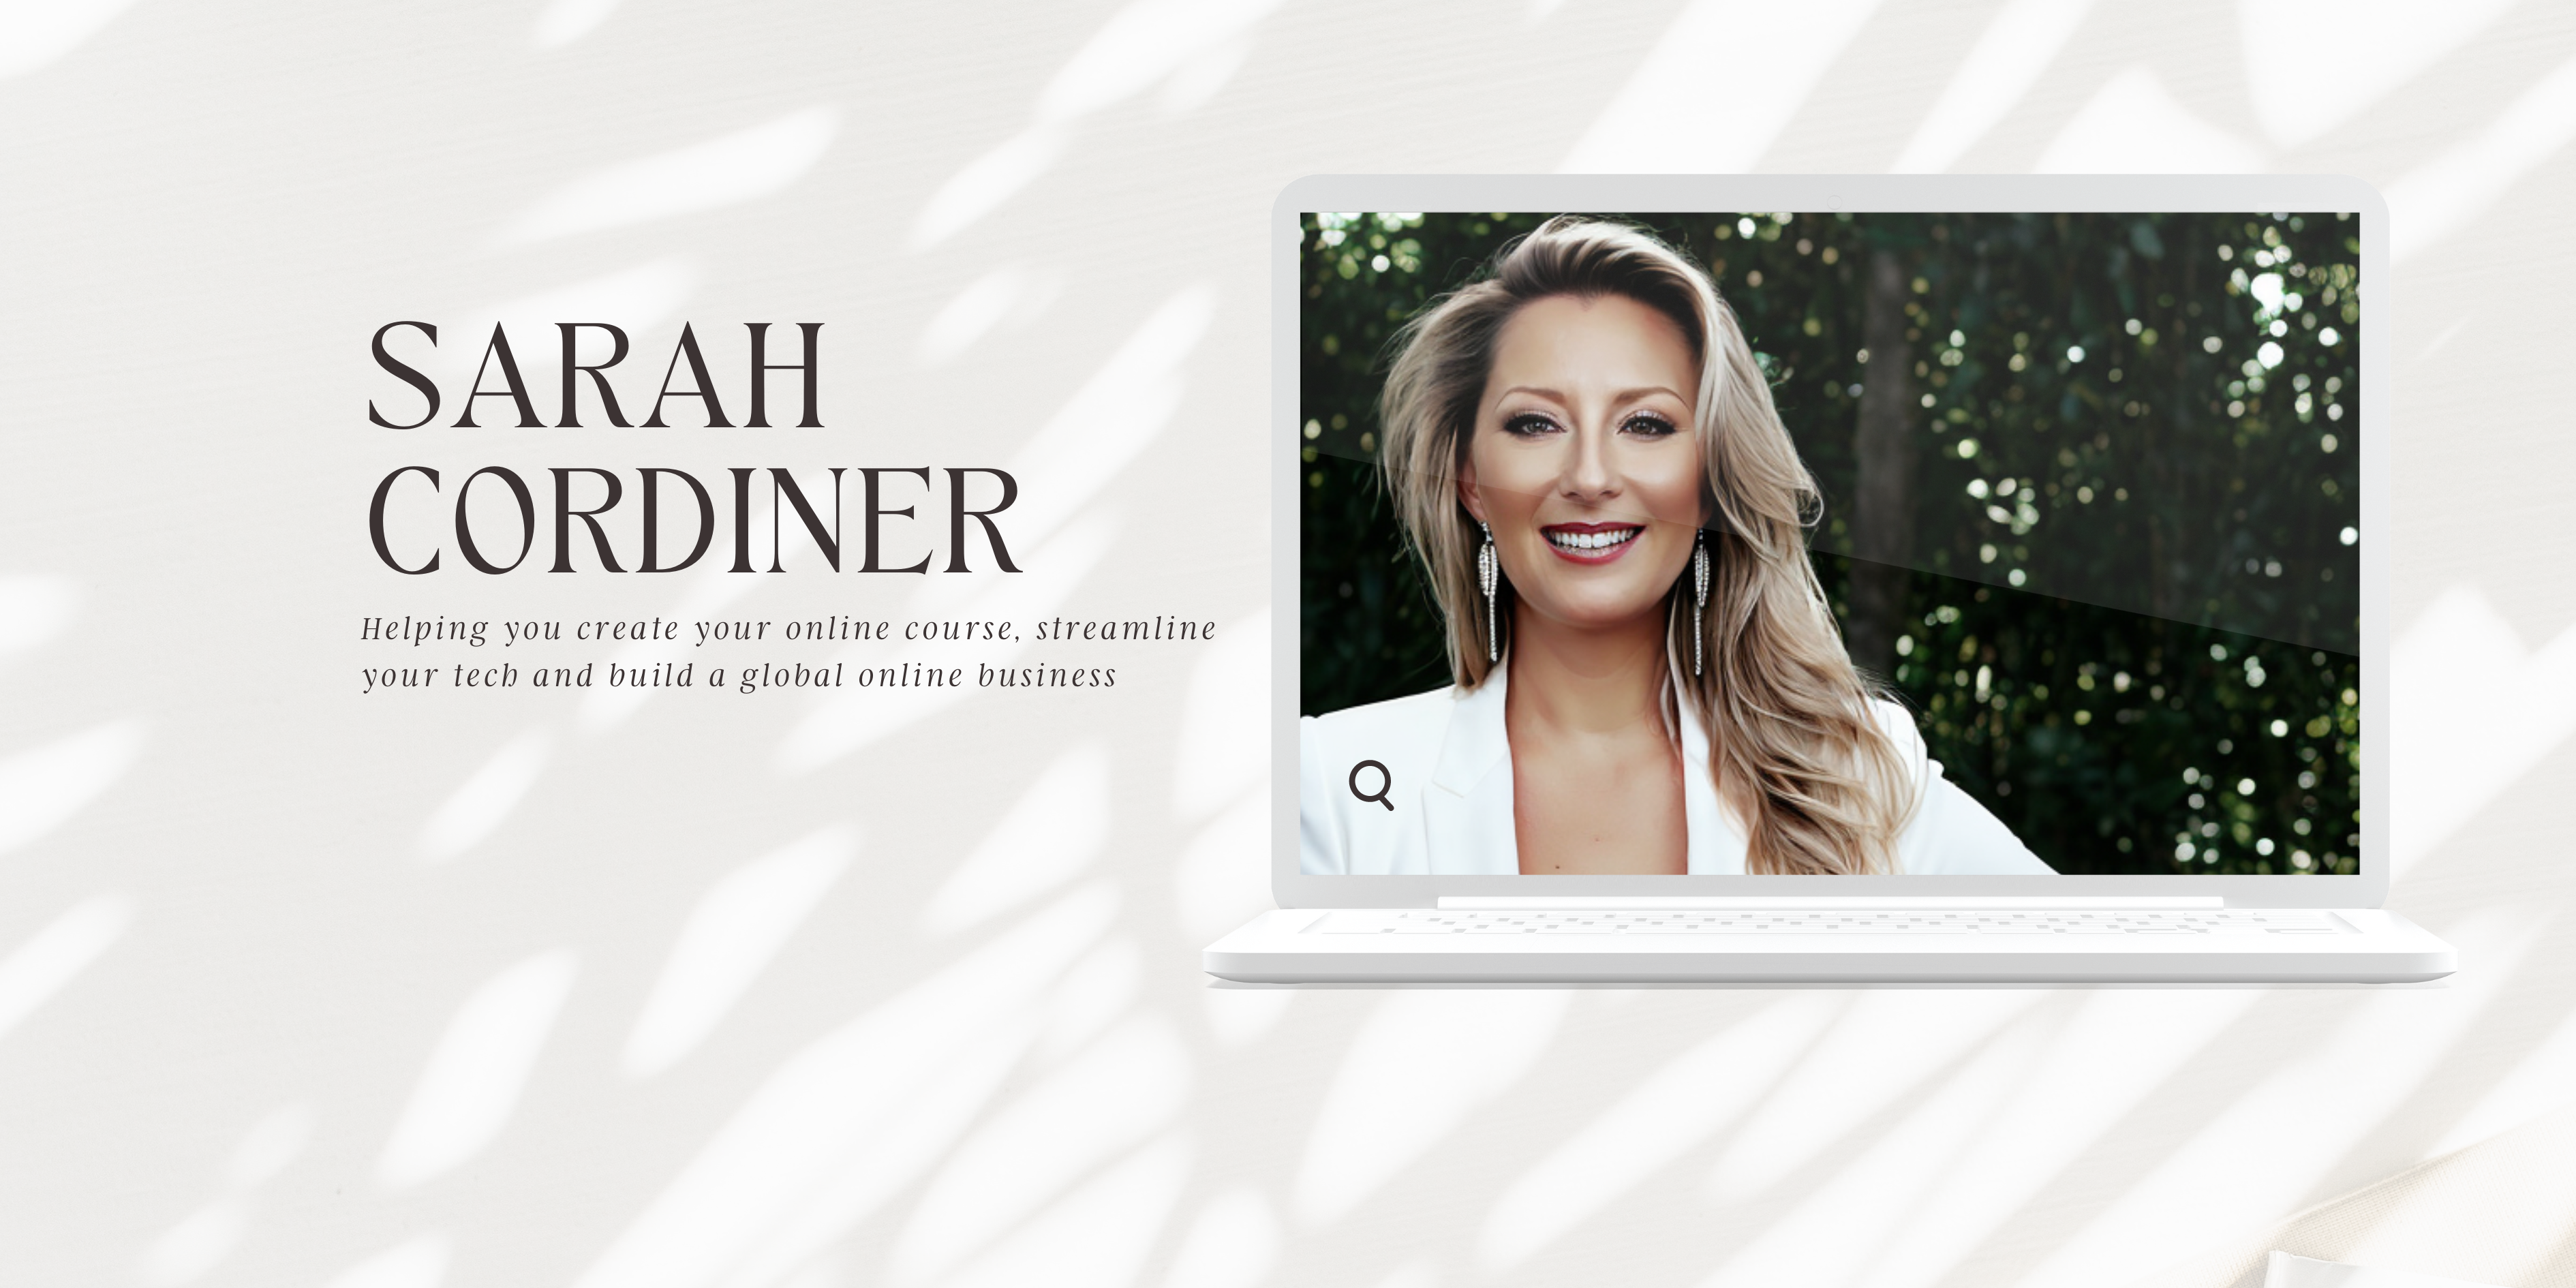 Sarah cordiner website banner